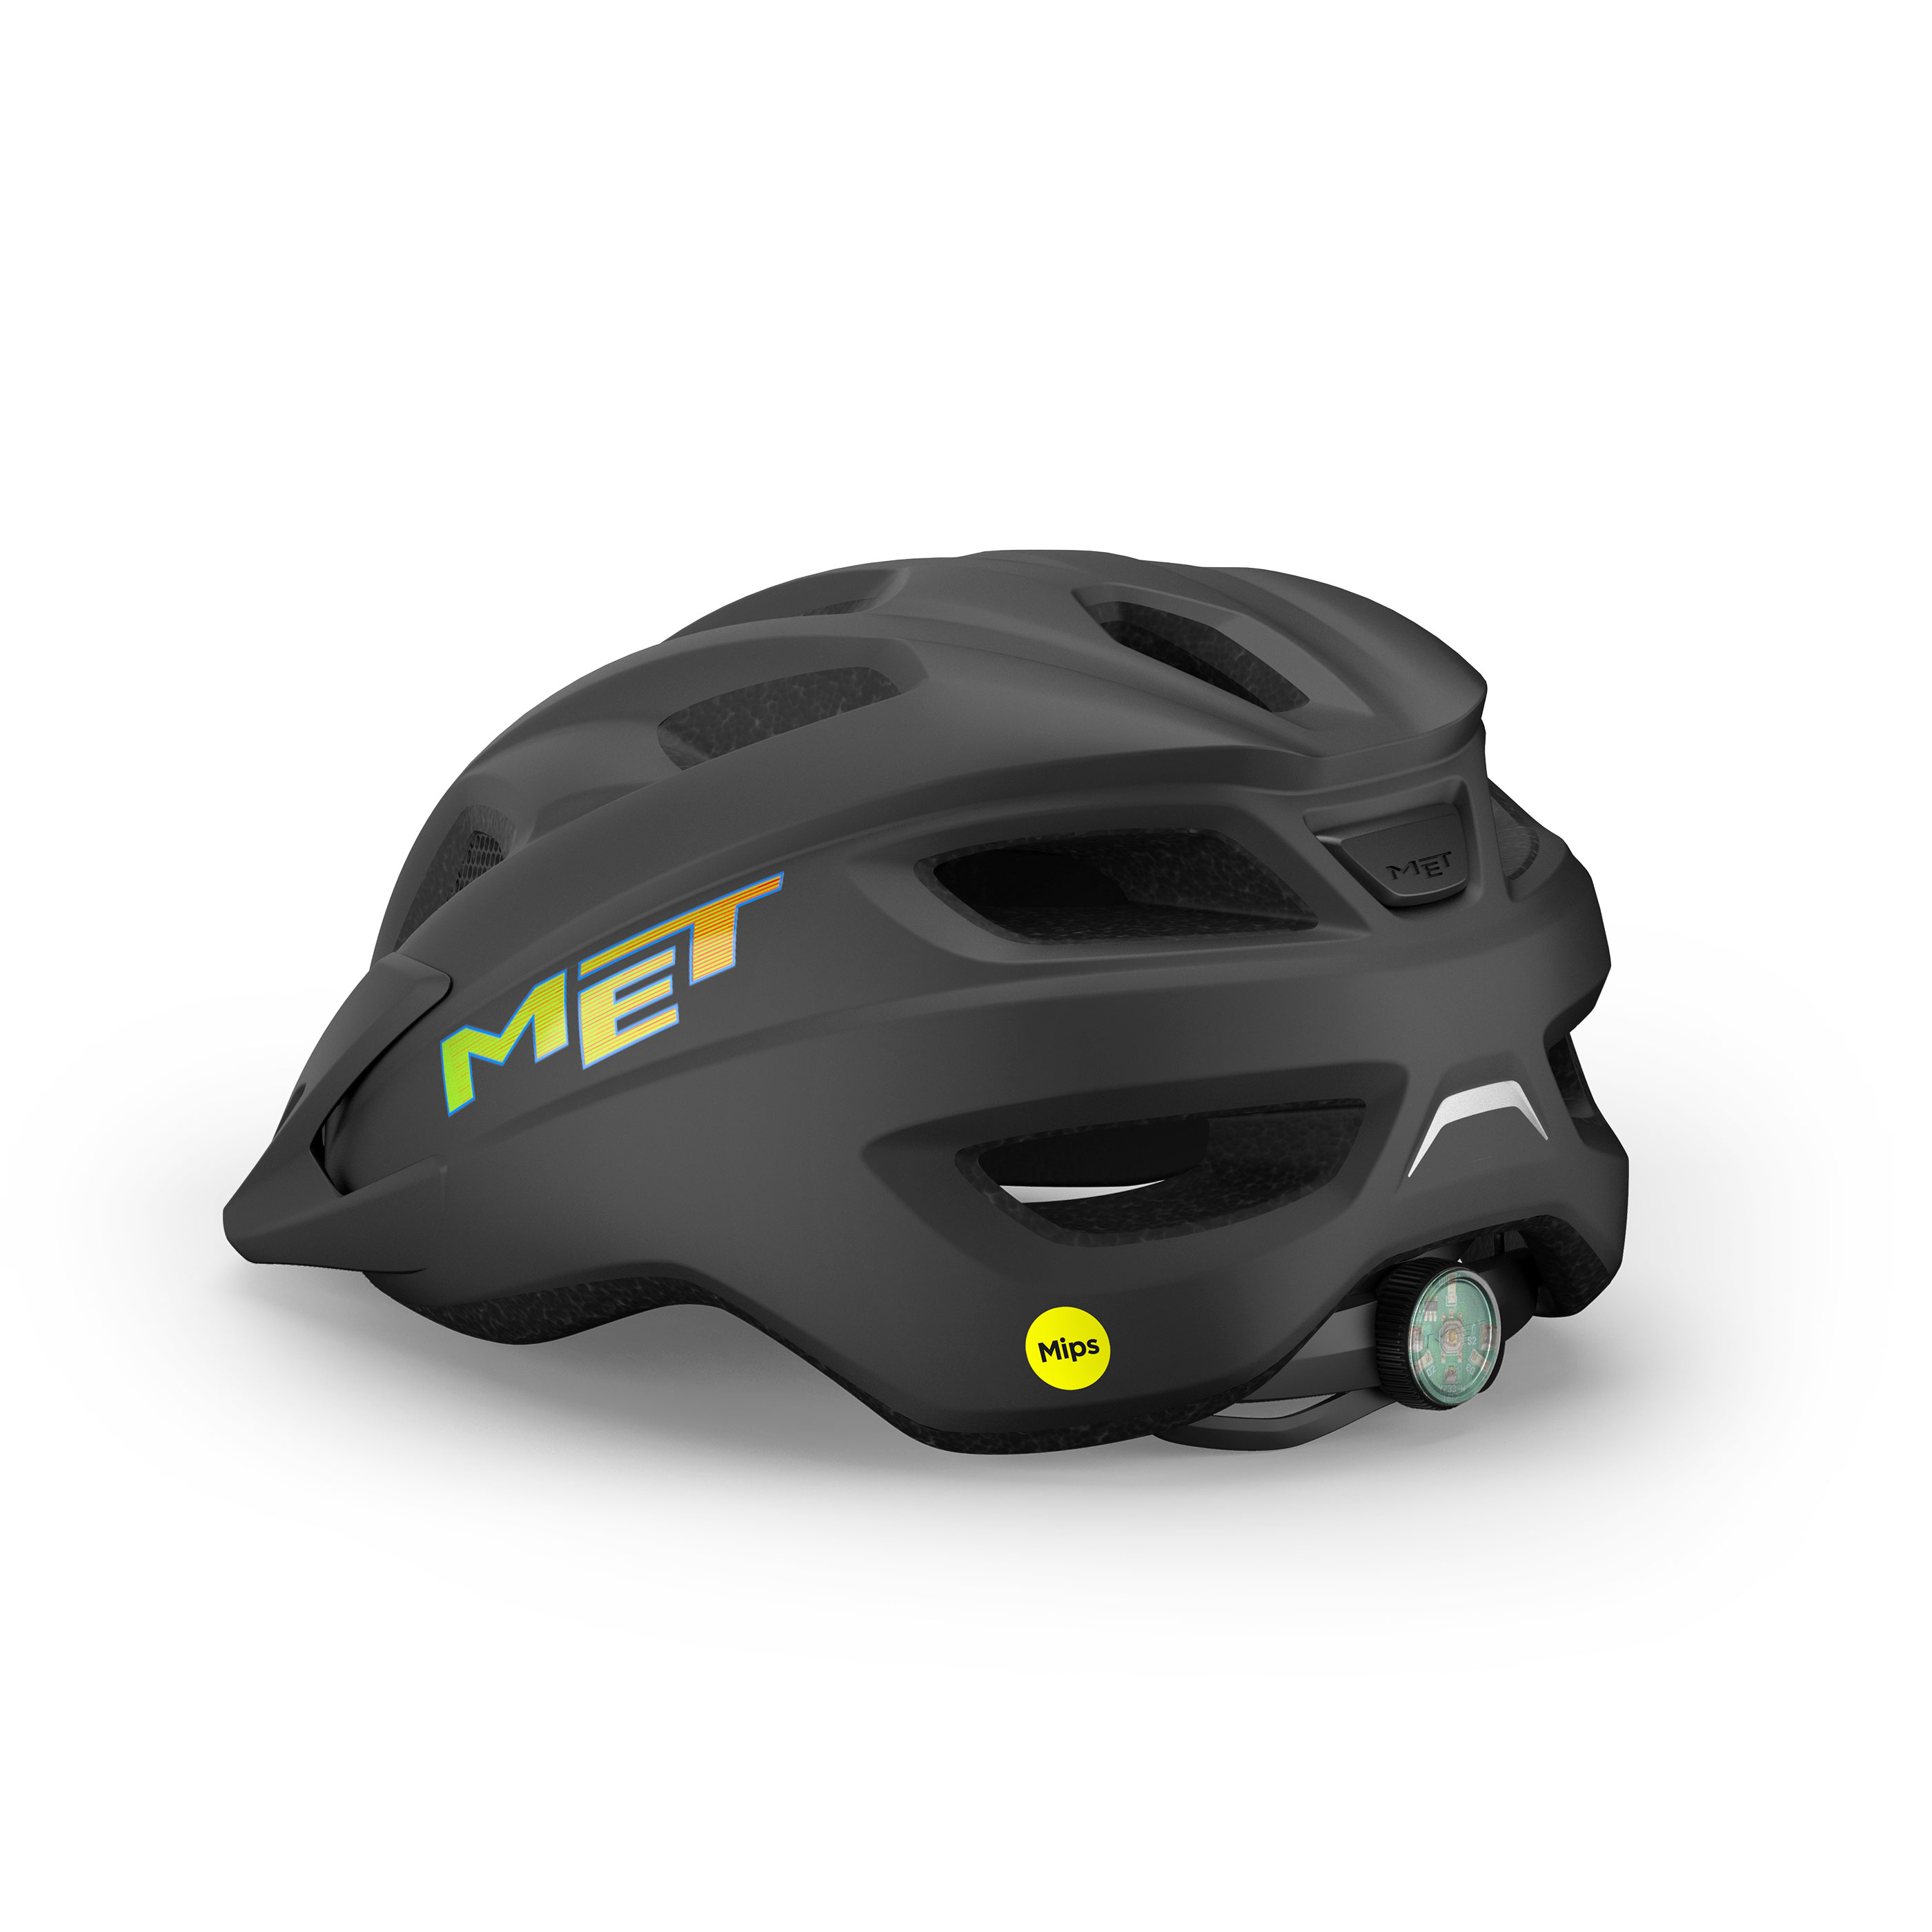 met-crackerjack-mips-kids-helmet-M148NO1-back